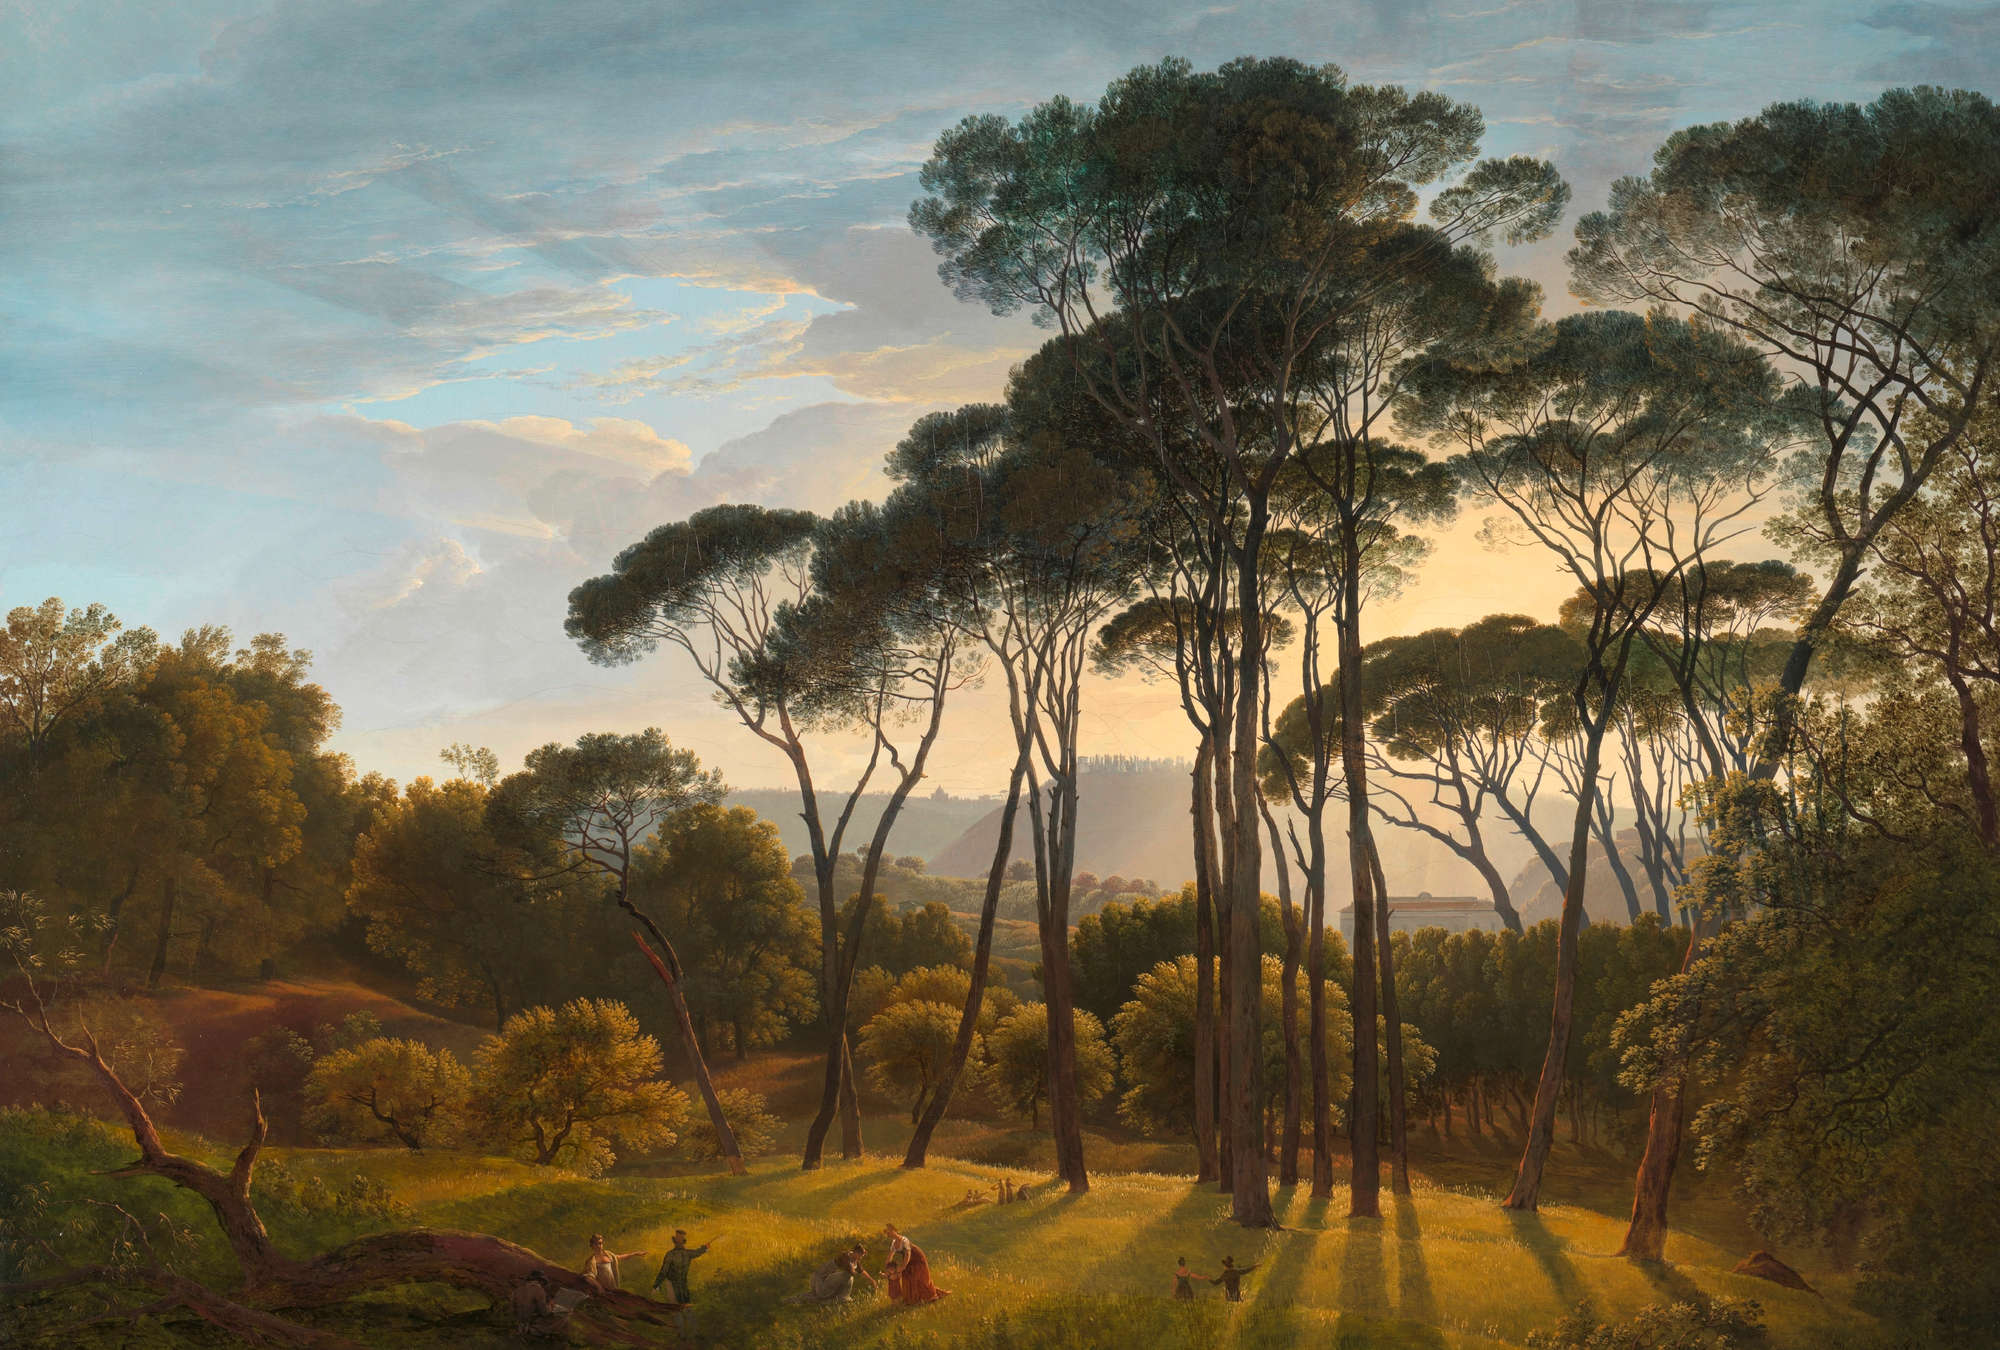             Fototapete Bäumen im Gemäldestil, Landschaft – Bunt, Grün, Braun
        